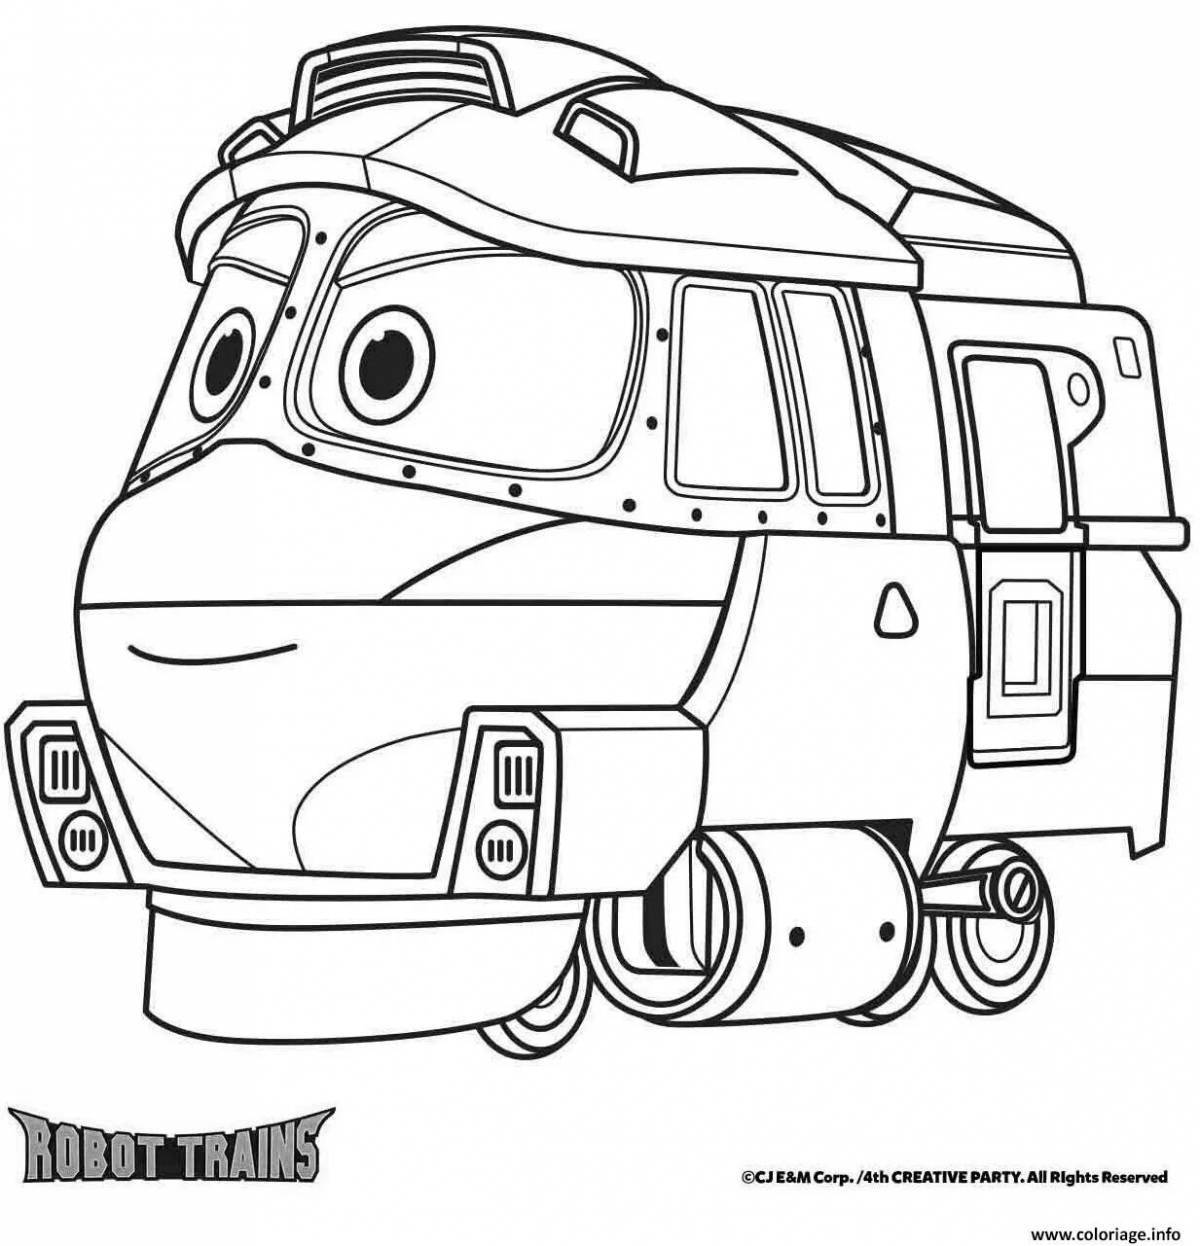 Victor's bright robotic train coloring book